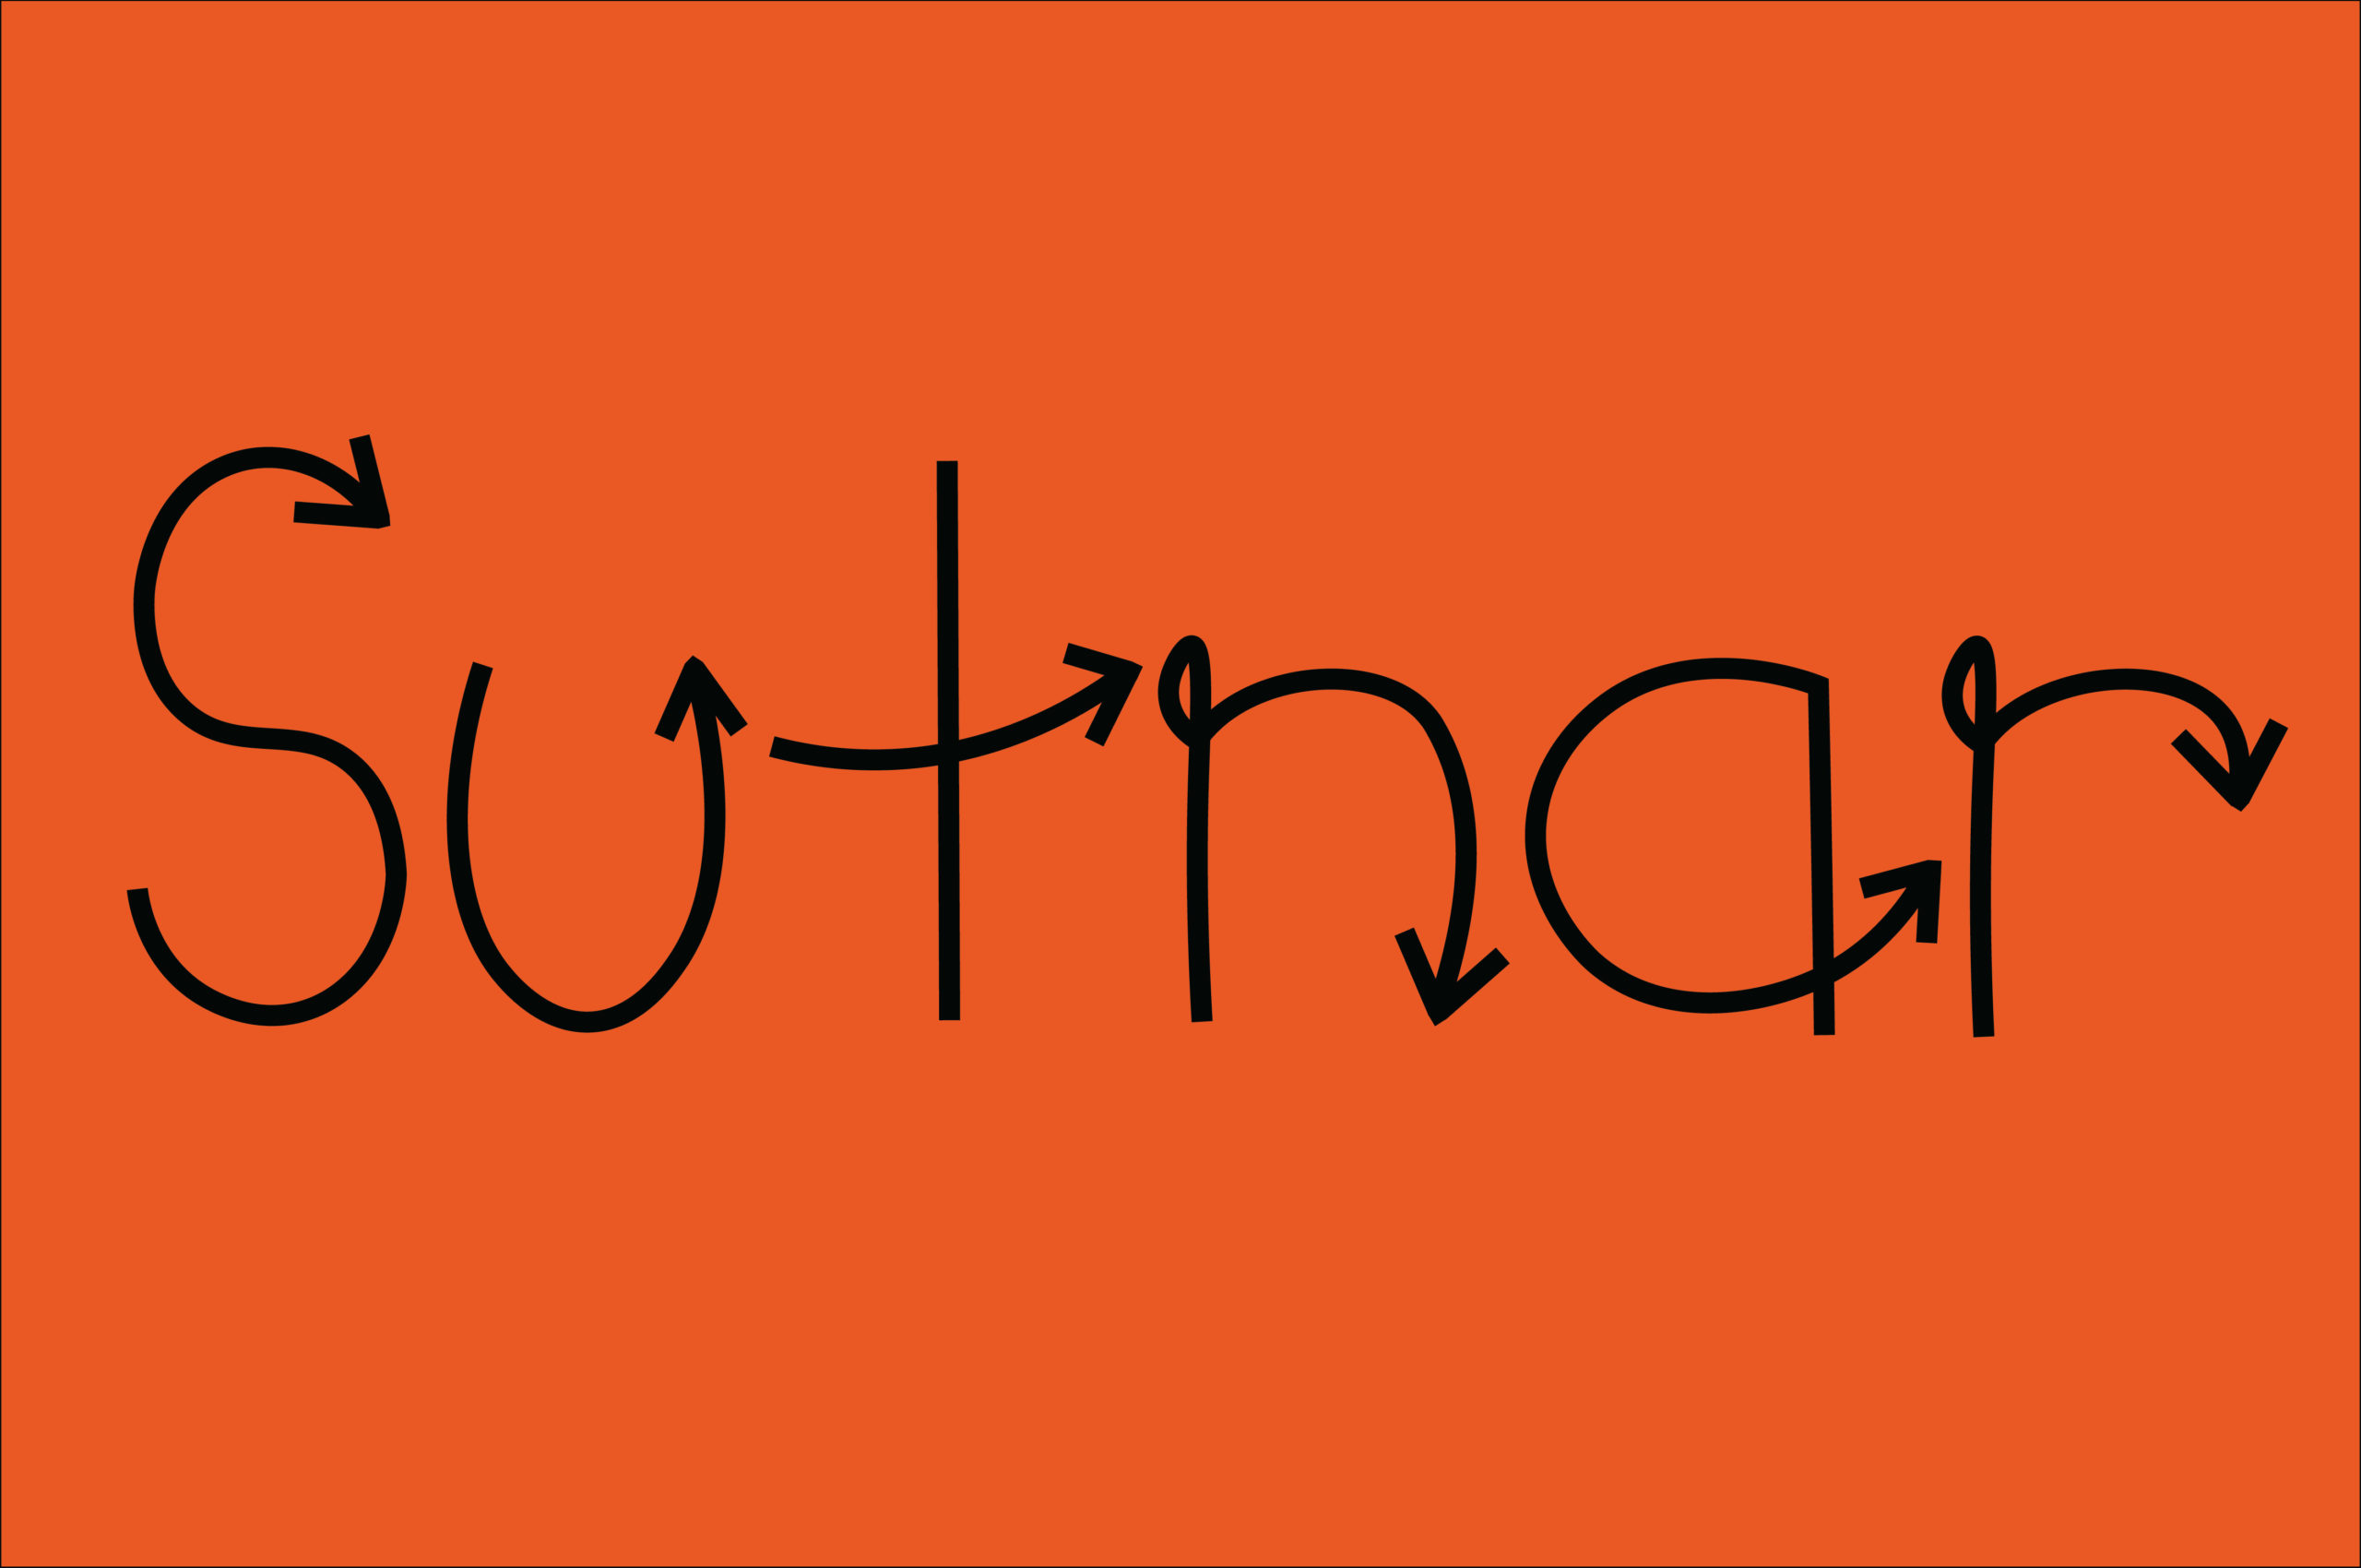 sutnar inspired arrow typeface